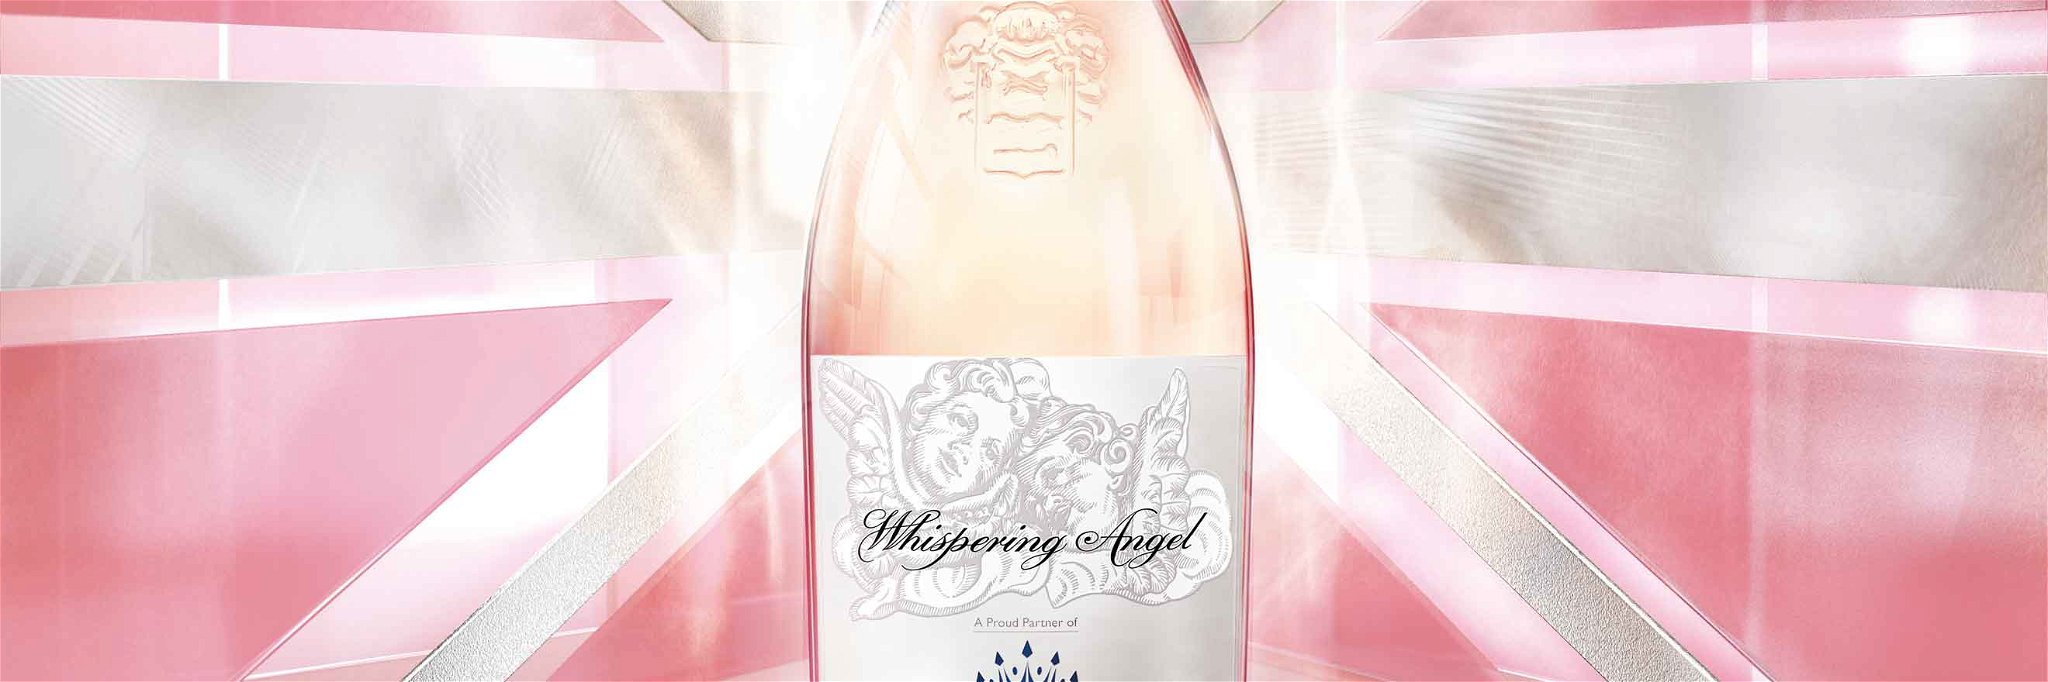 Whispering Angel's Limited Edition Jubilee Bottle